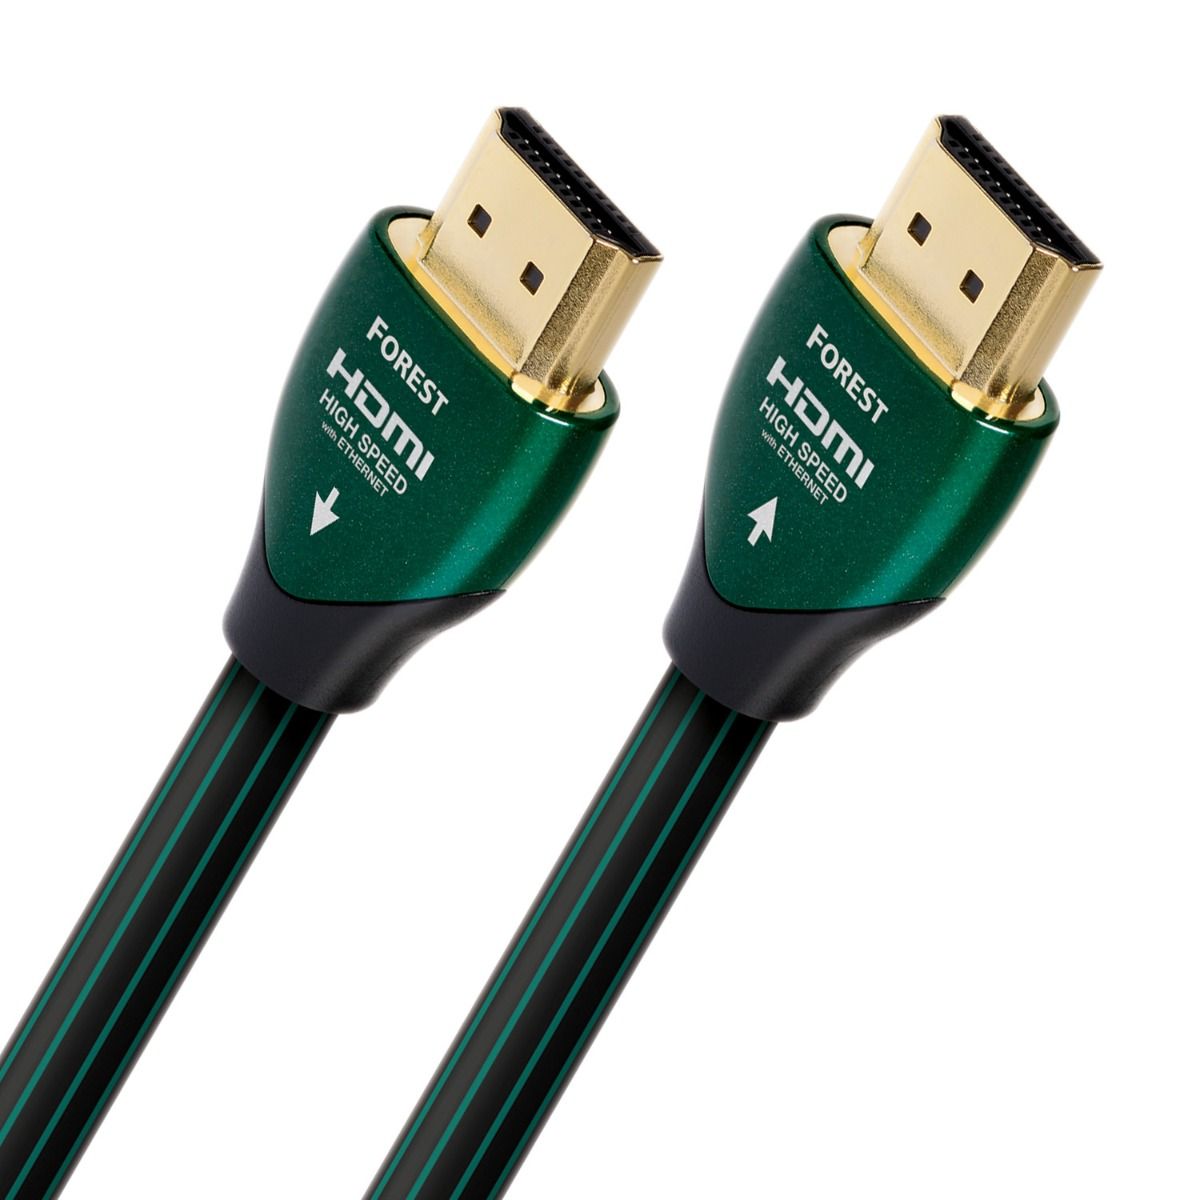 Audioquest HDMI-X 2 meter HDMI Cable